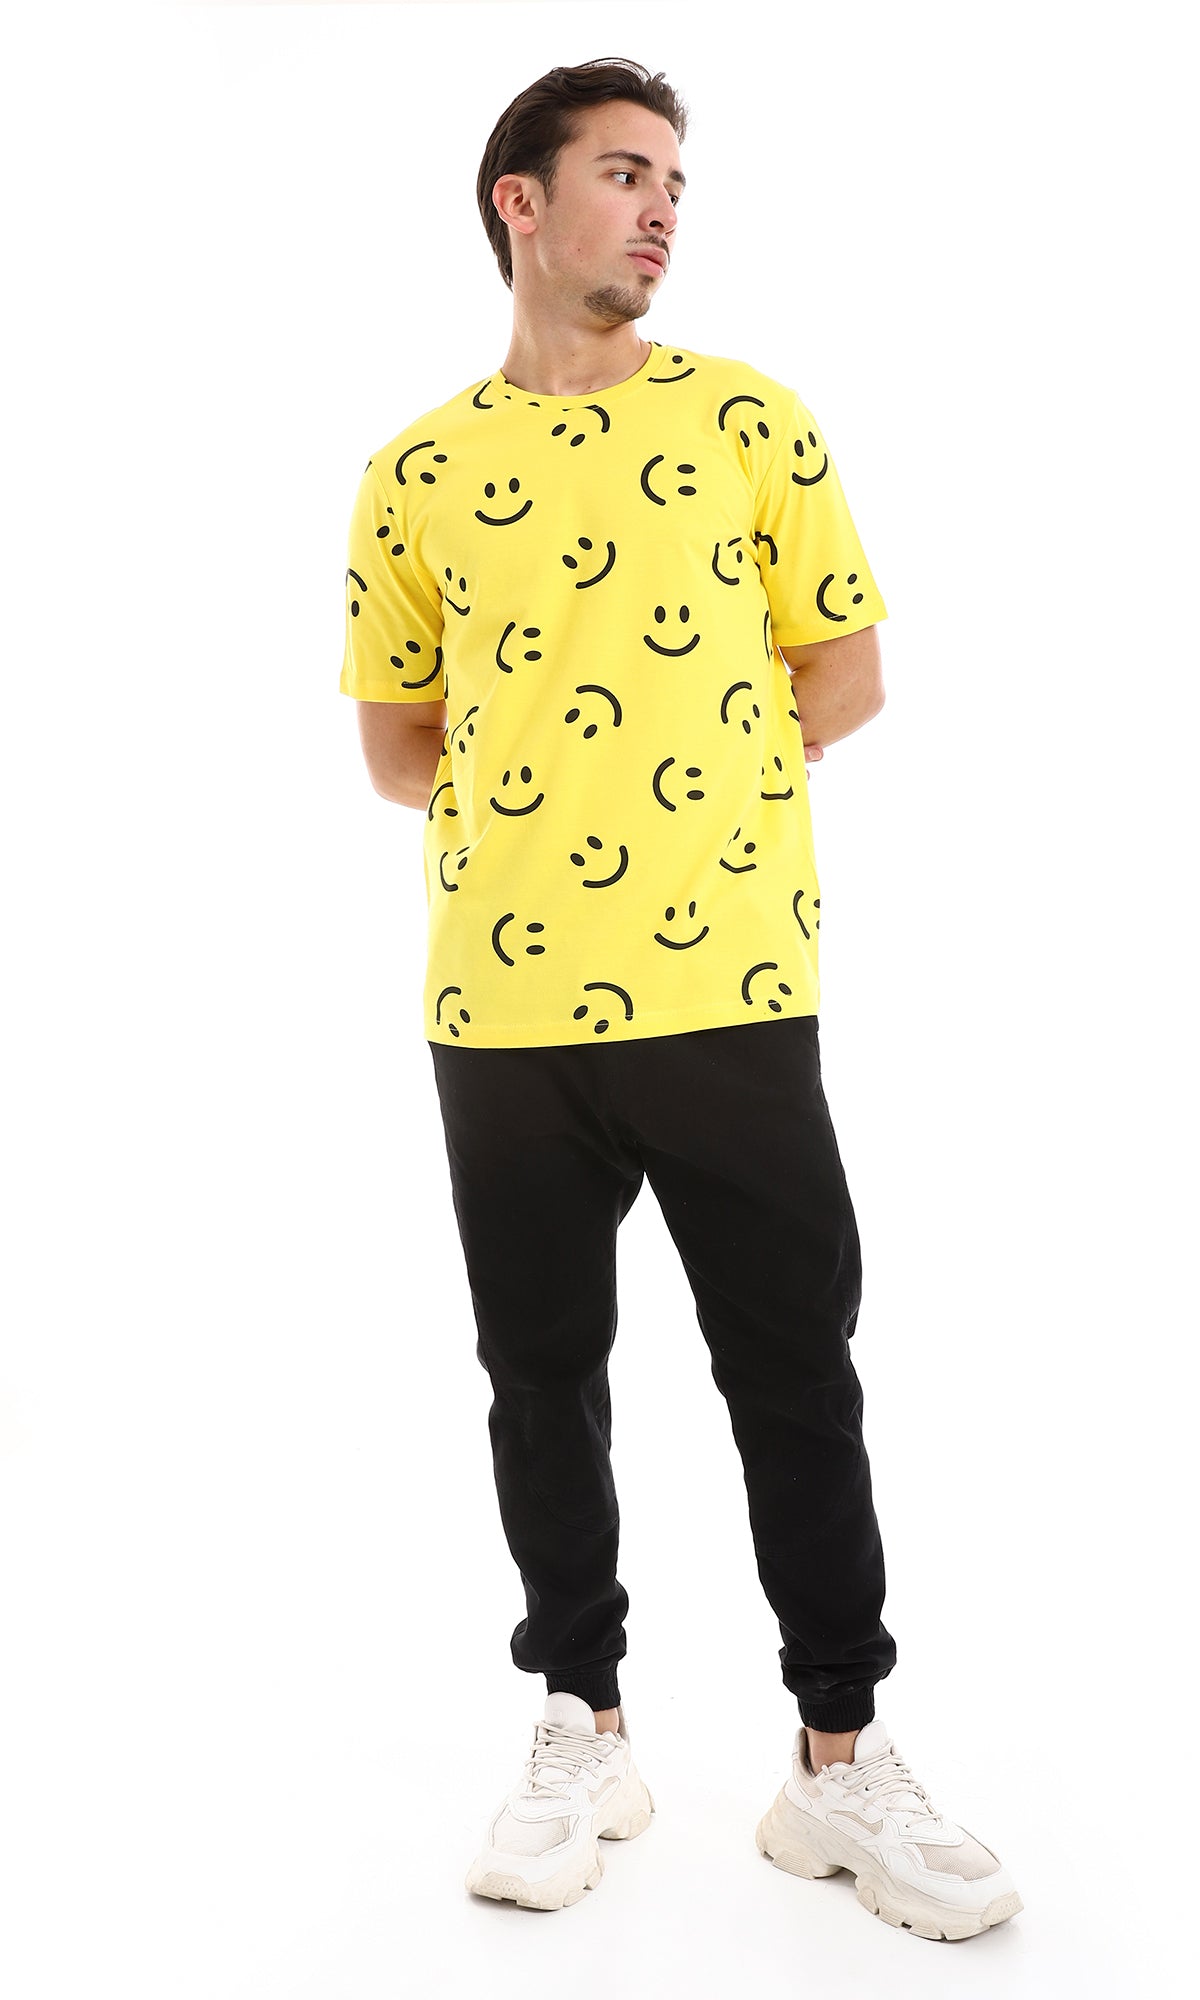 O164736 Smiles Patterned Slip On Cotton Tee - Yellow & Black